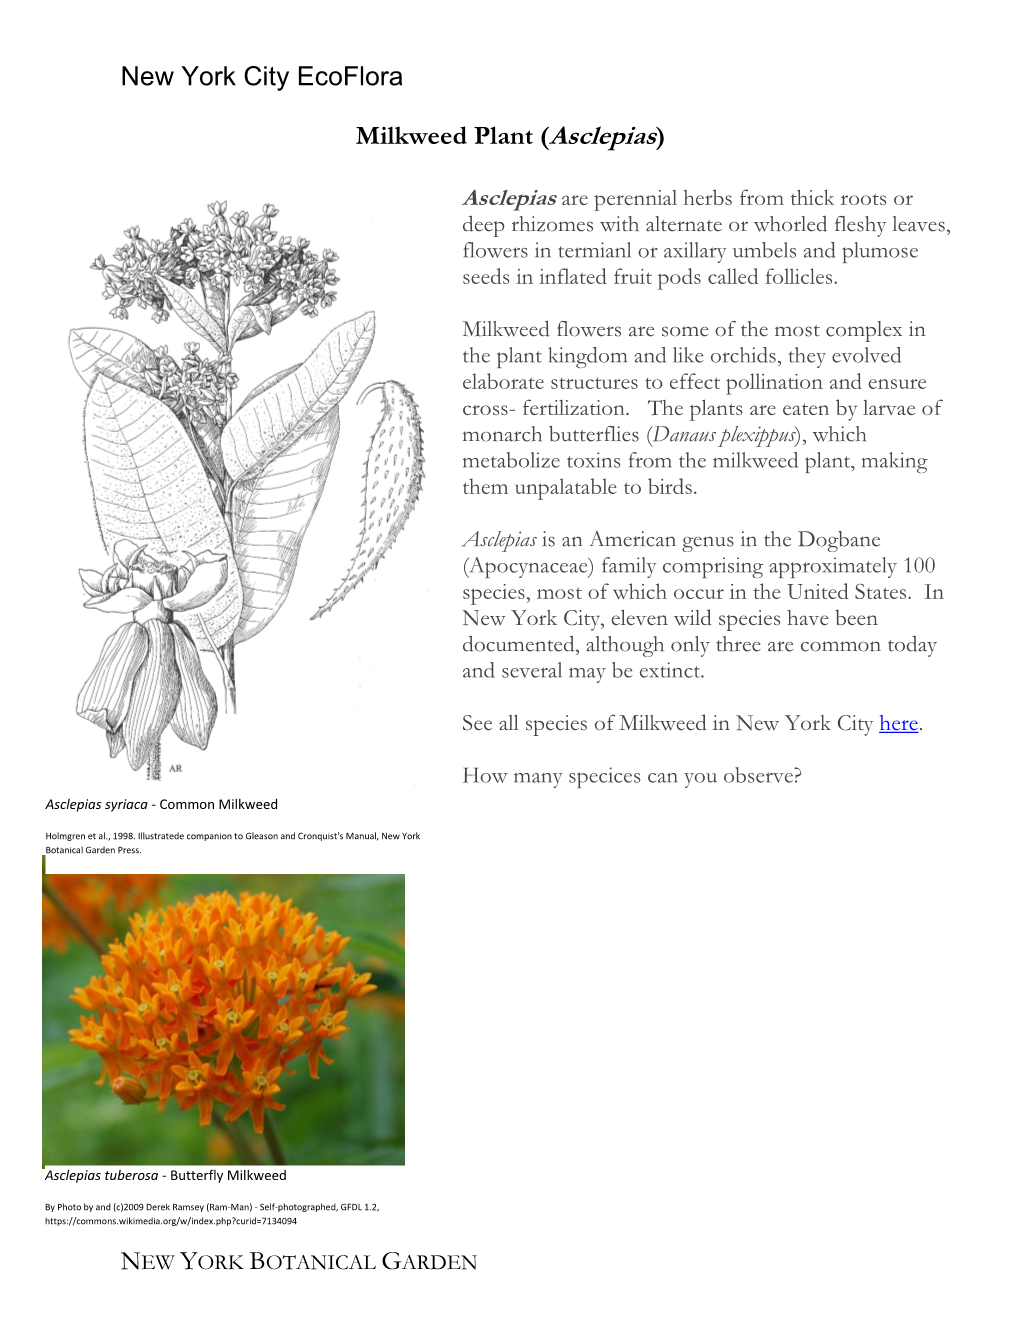 New York City Ecoflora Milkweed Plant (Asclepias)